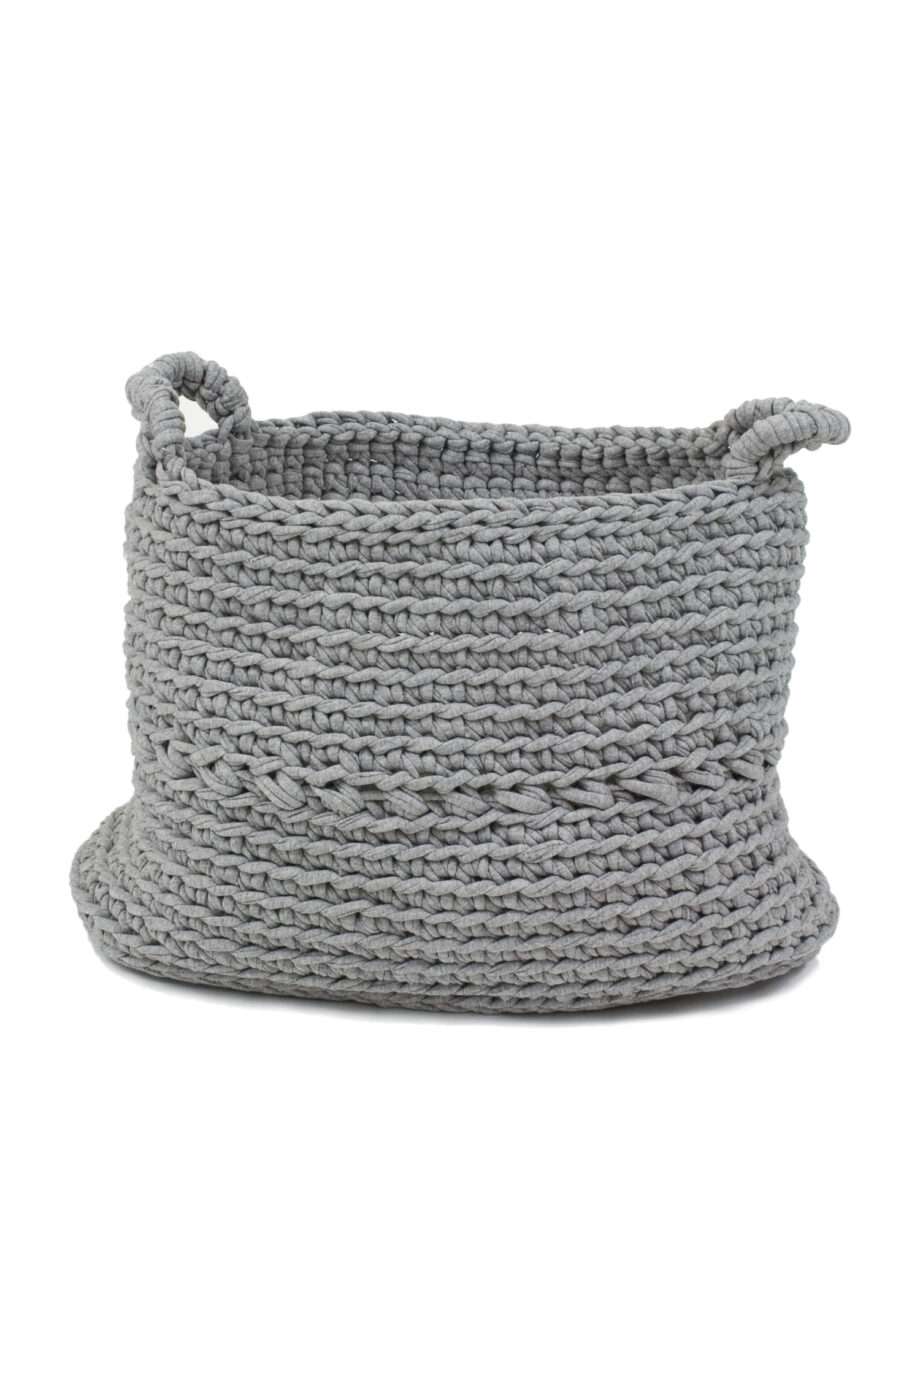 basic light grey crochet cotton basket medium